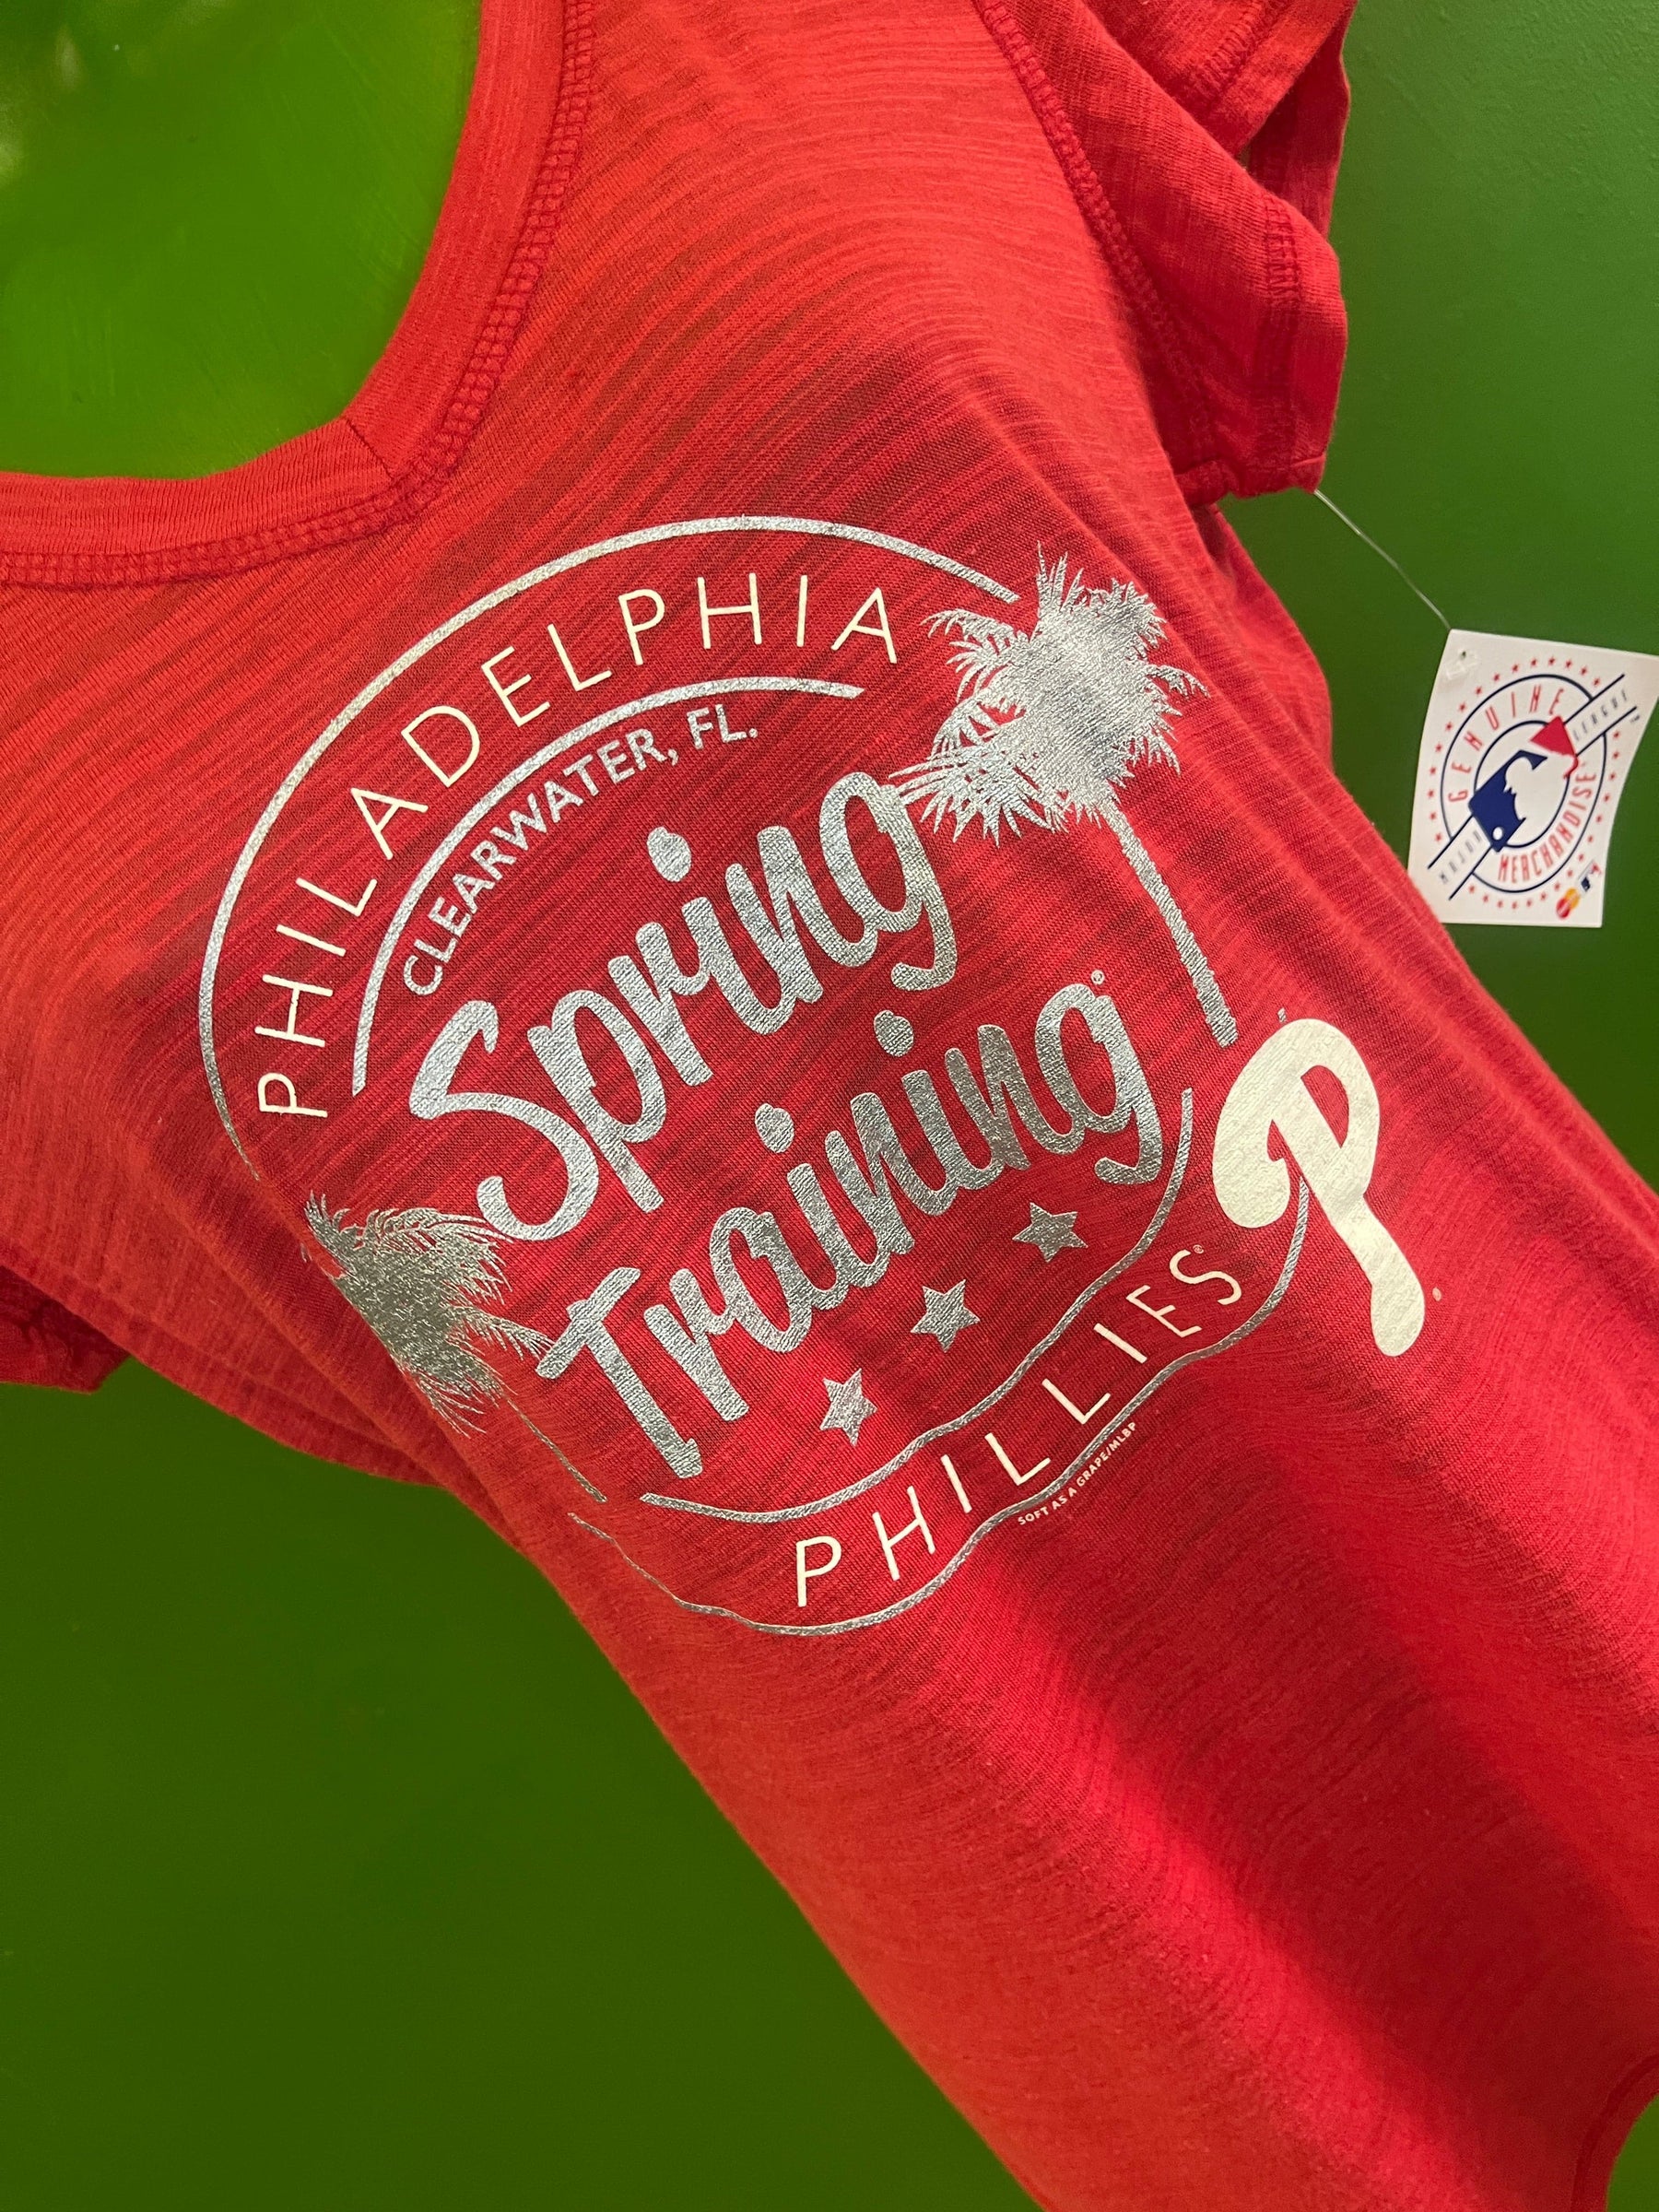 MLB Philadelphia Phillies "Spring Training" Sheer  T-Shirt Women's Medium NWT